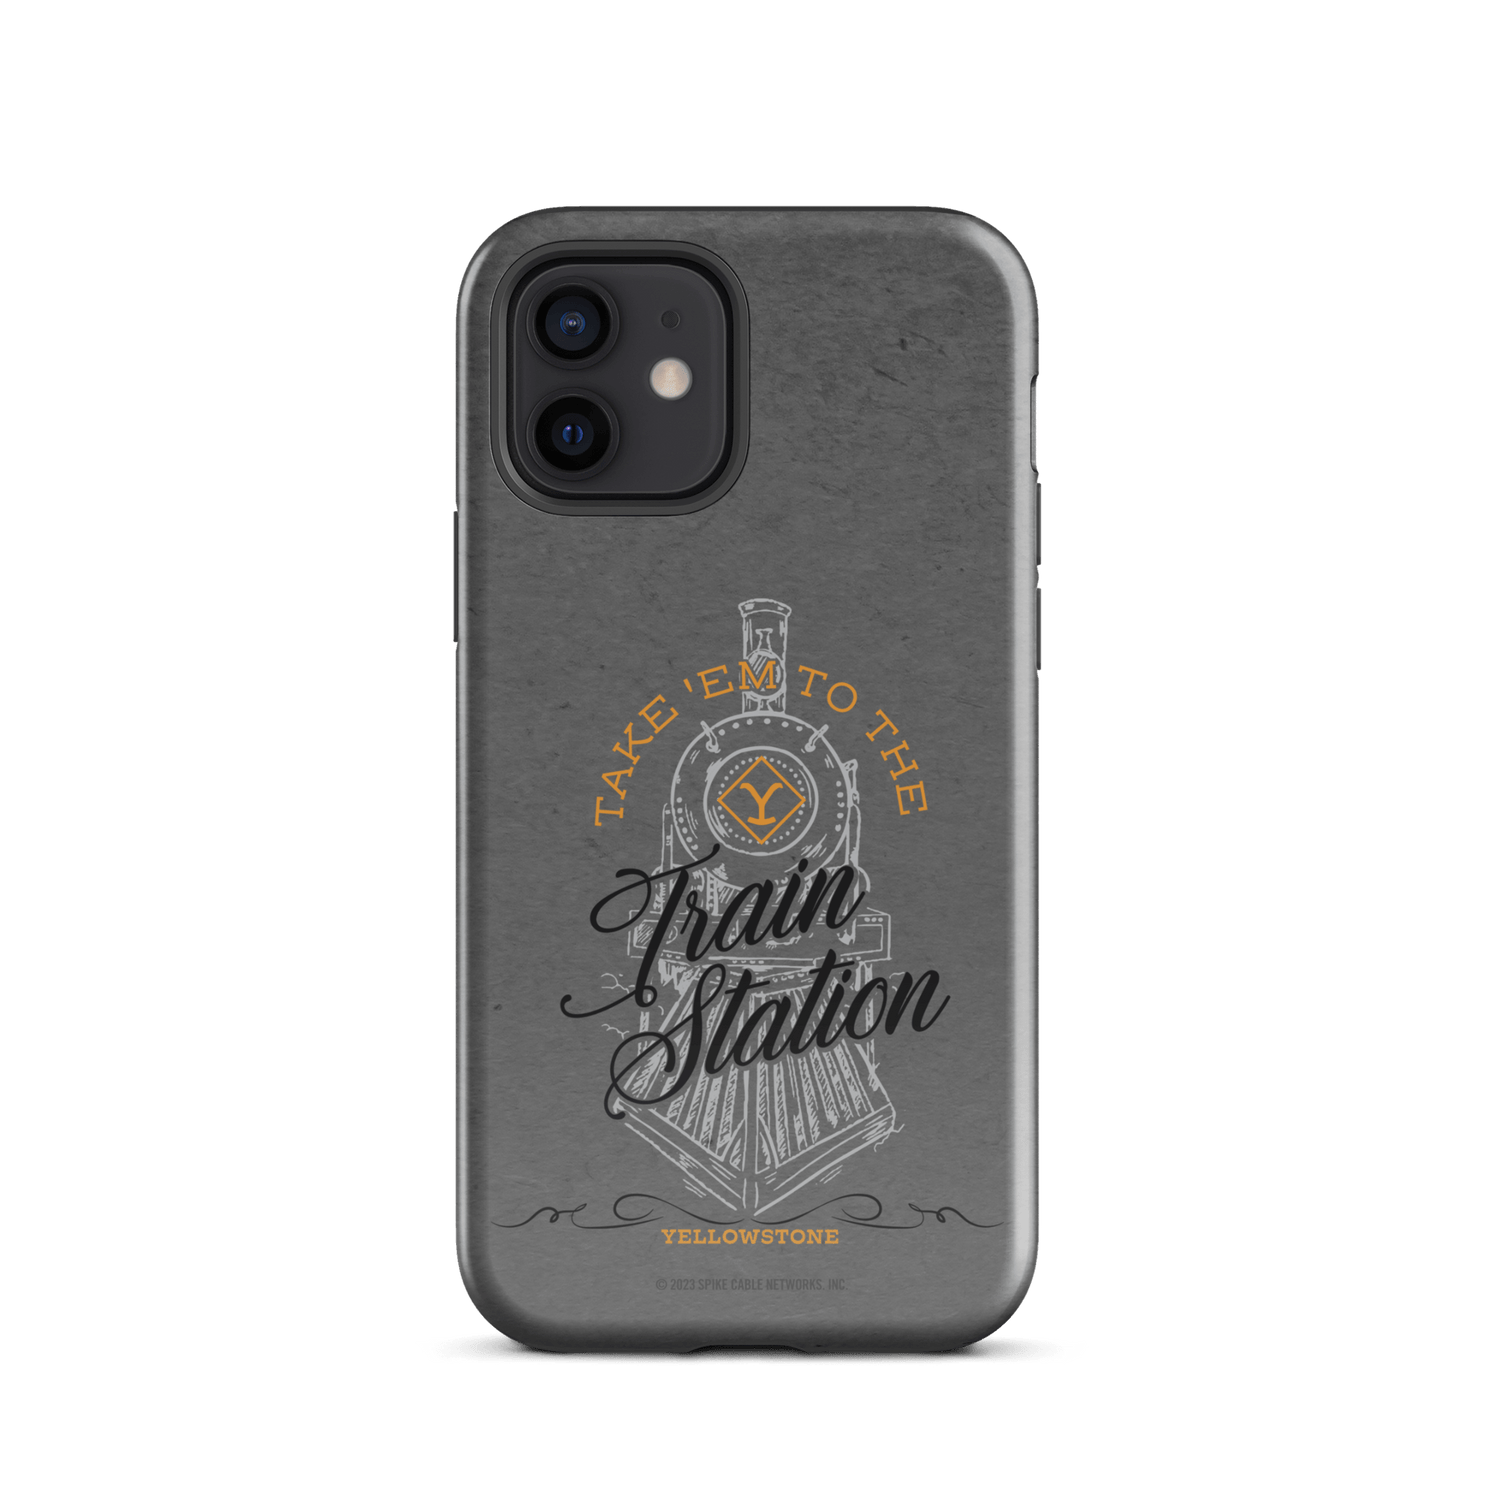 Yellowstone Train Station Tough Phone Case - iPhone - Paramount Shop